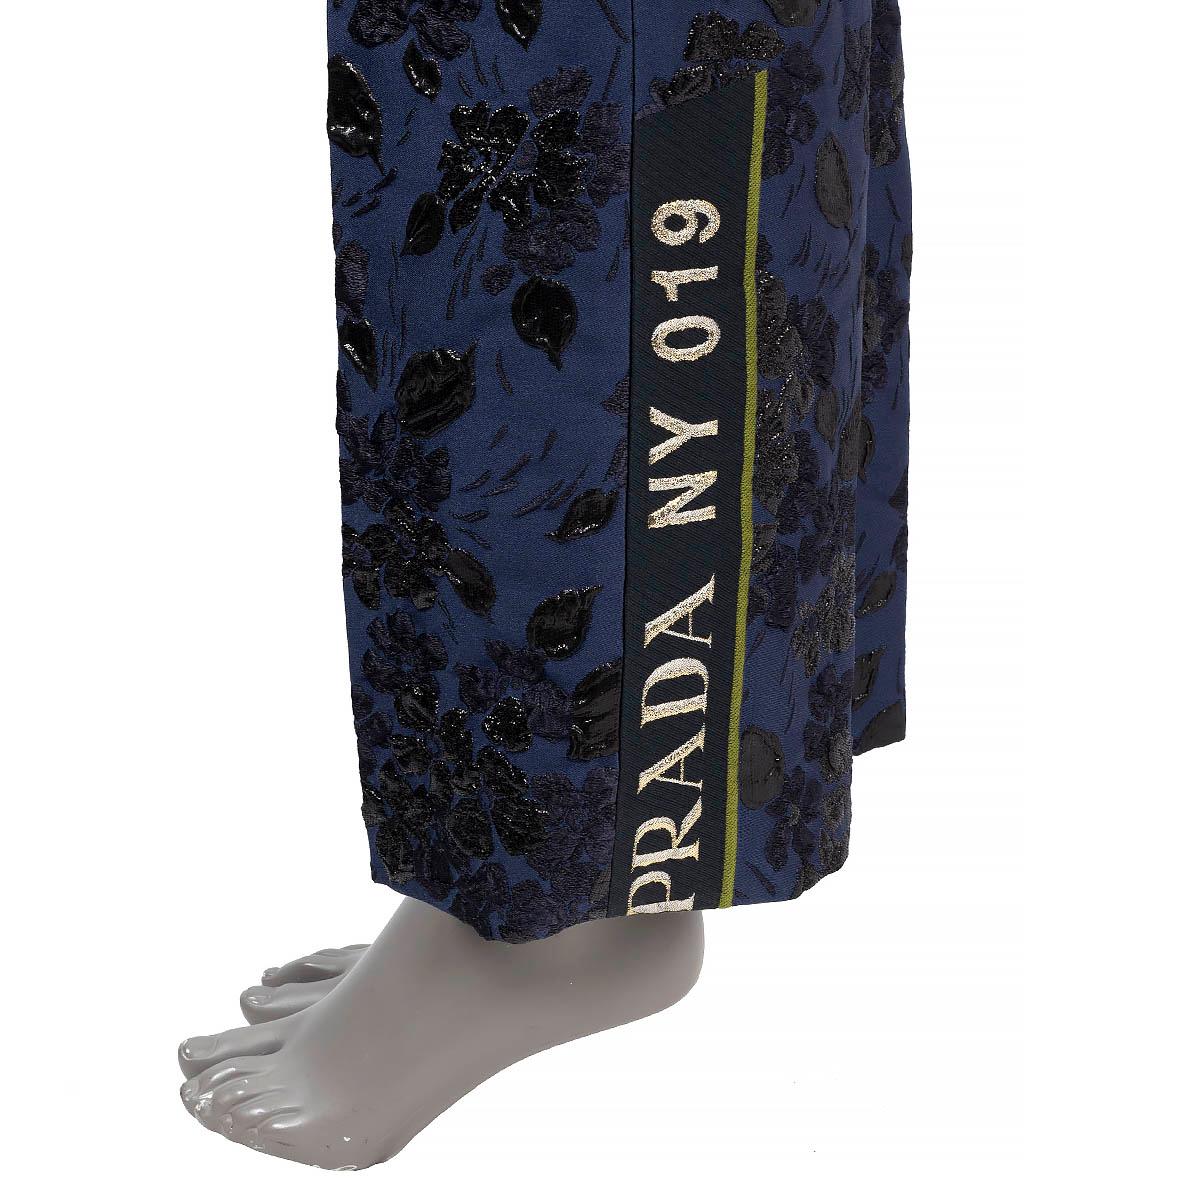 PRADA blue & black 2019 FLORAL CLOQUE WIDE LEG Pants 40 S In Excellent Condition For Sale In Zürich, CH